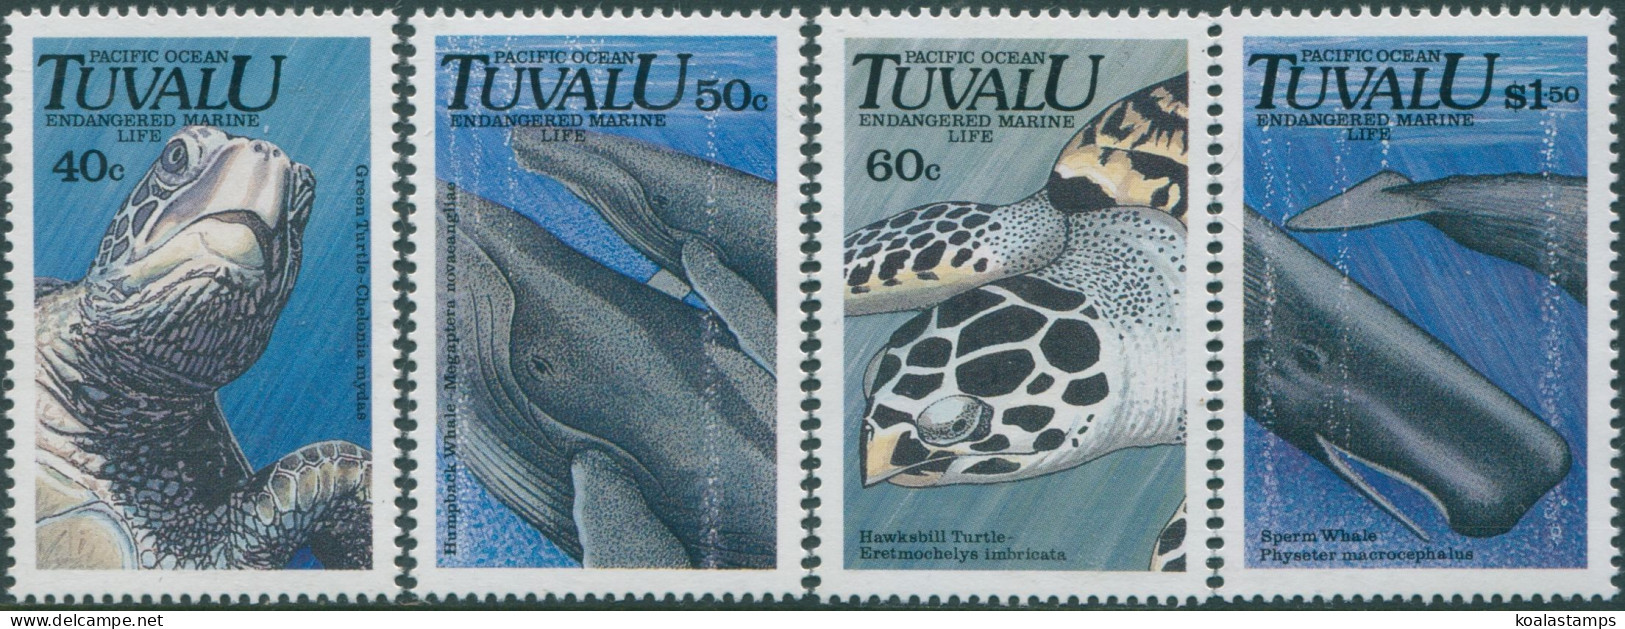 Tuvalu 1991 SG605-608 Endangered Marine Life Set MNH - Tuvalu